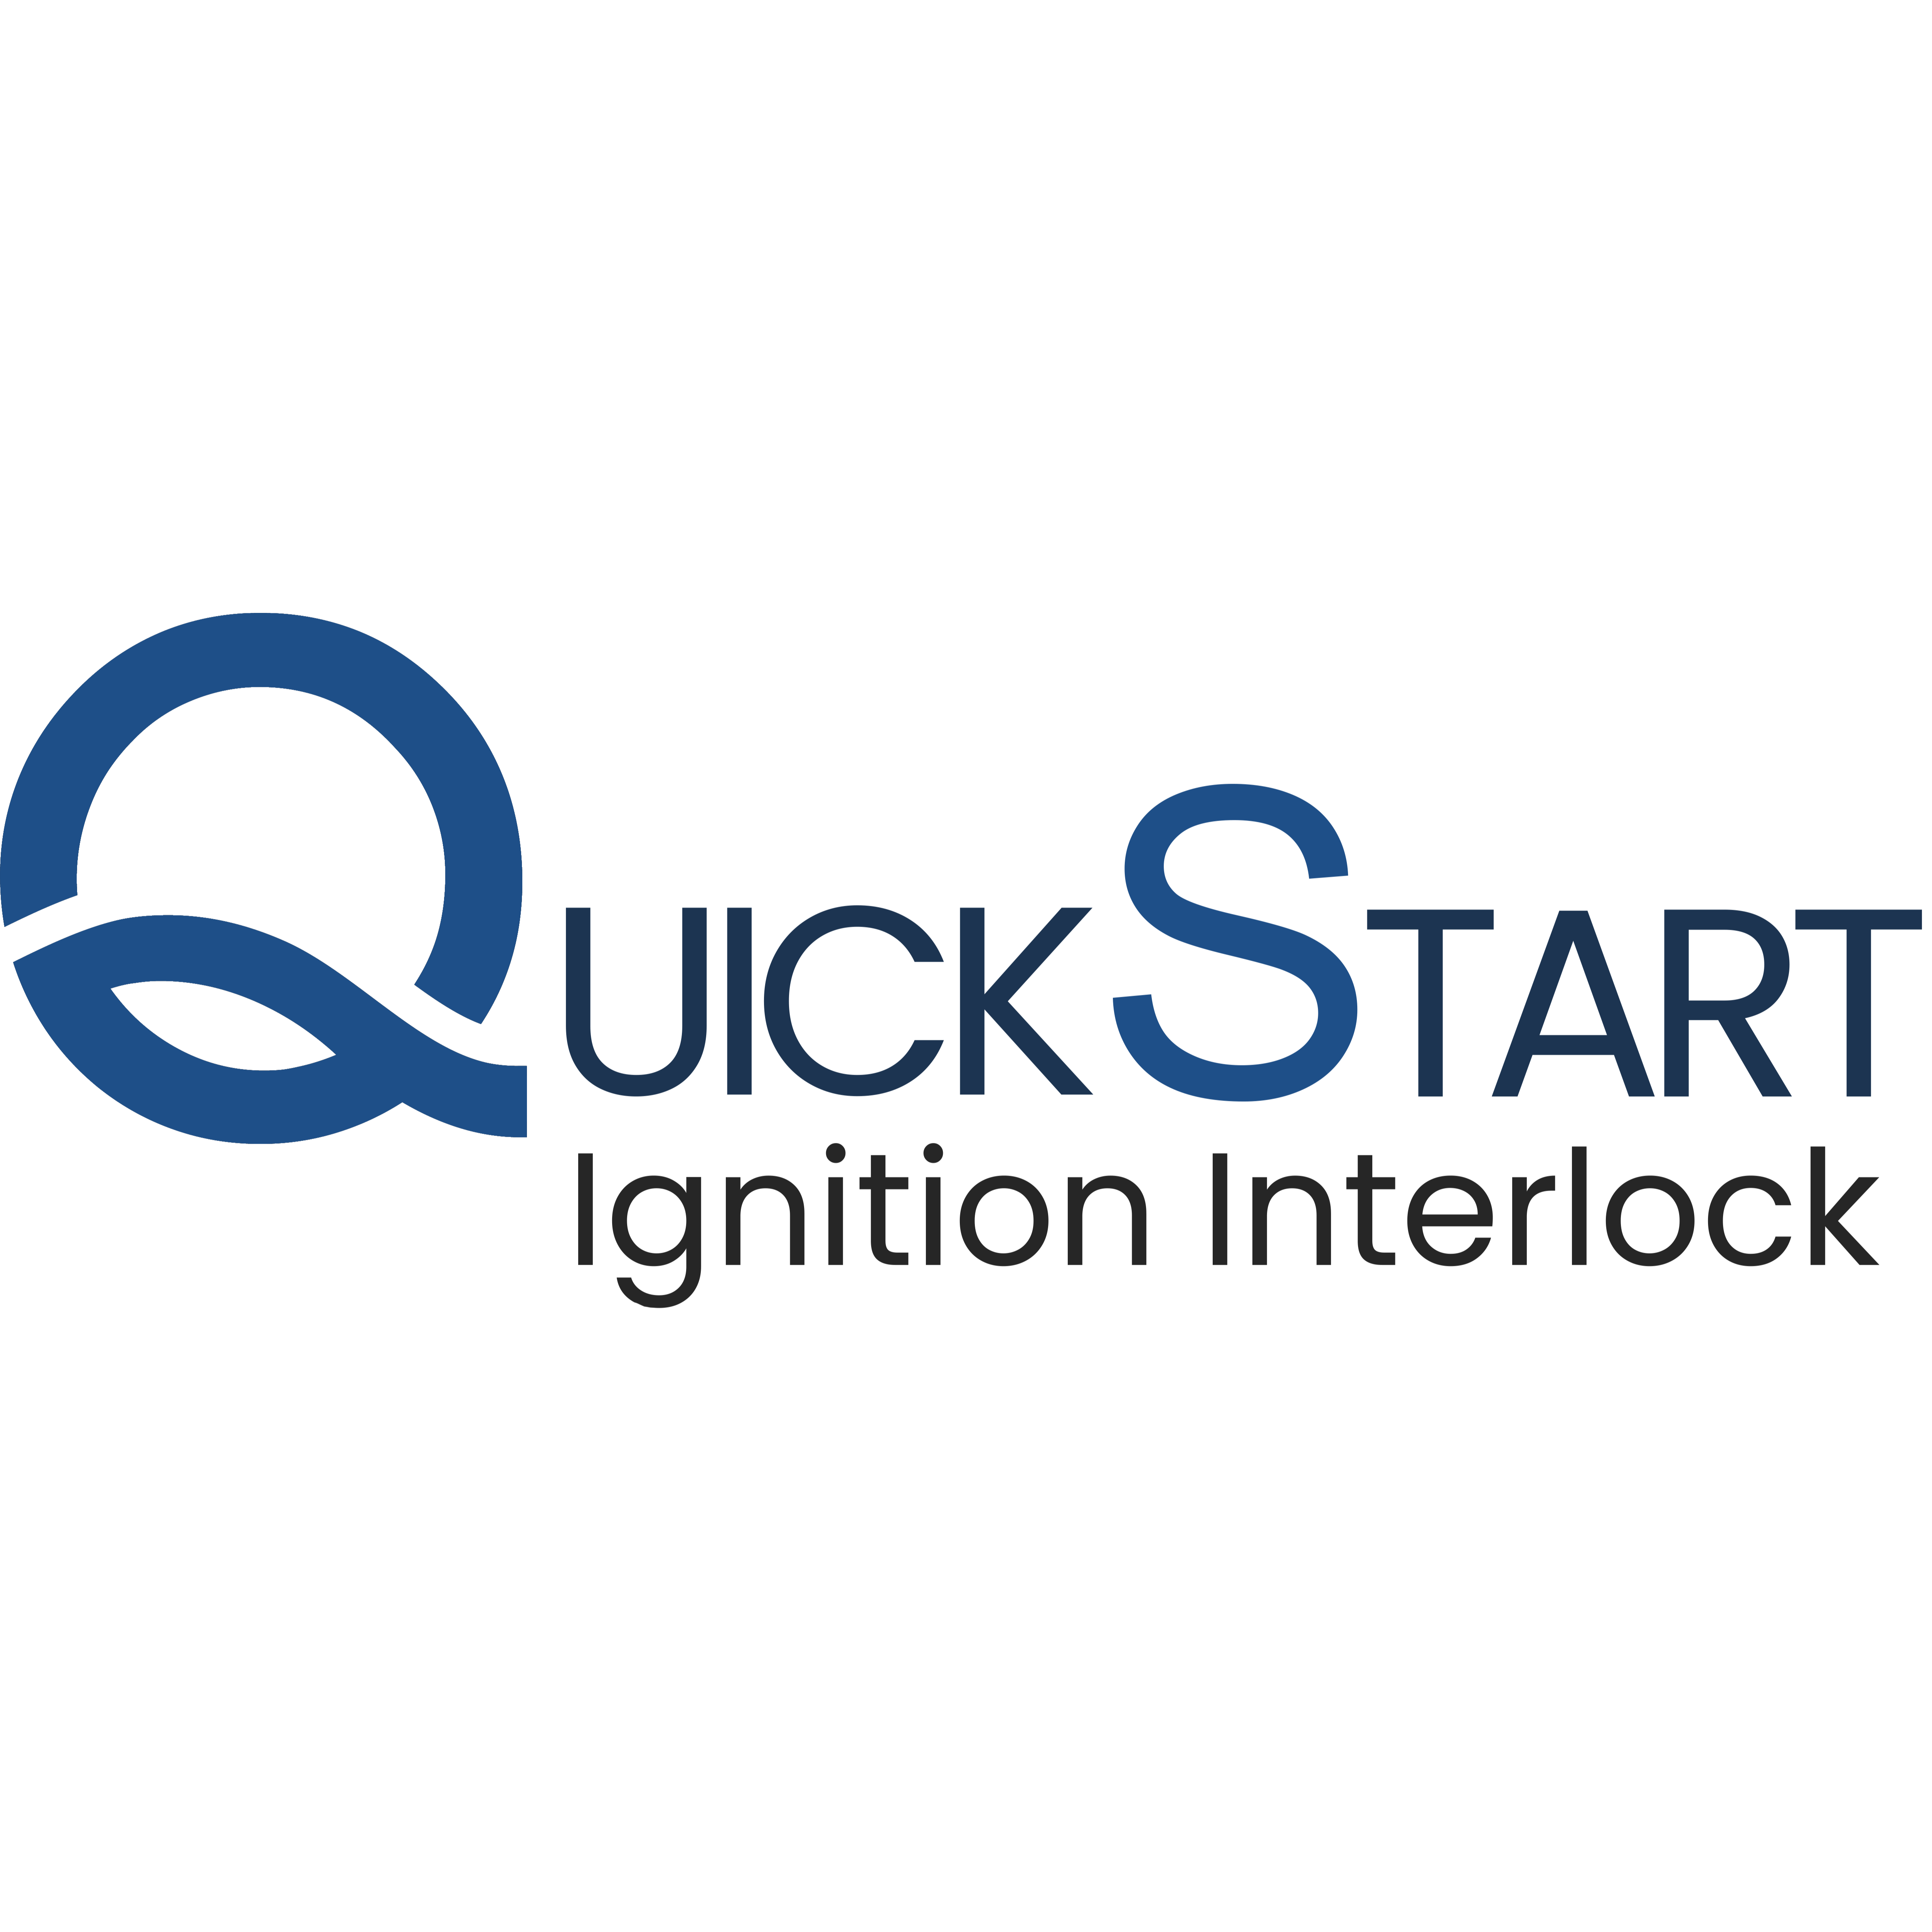 QuickStart Ignition Interlock - Tempe, AZ 85281 - (480)401-1744 | ShowMeLocal.com